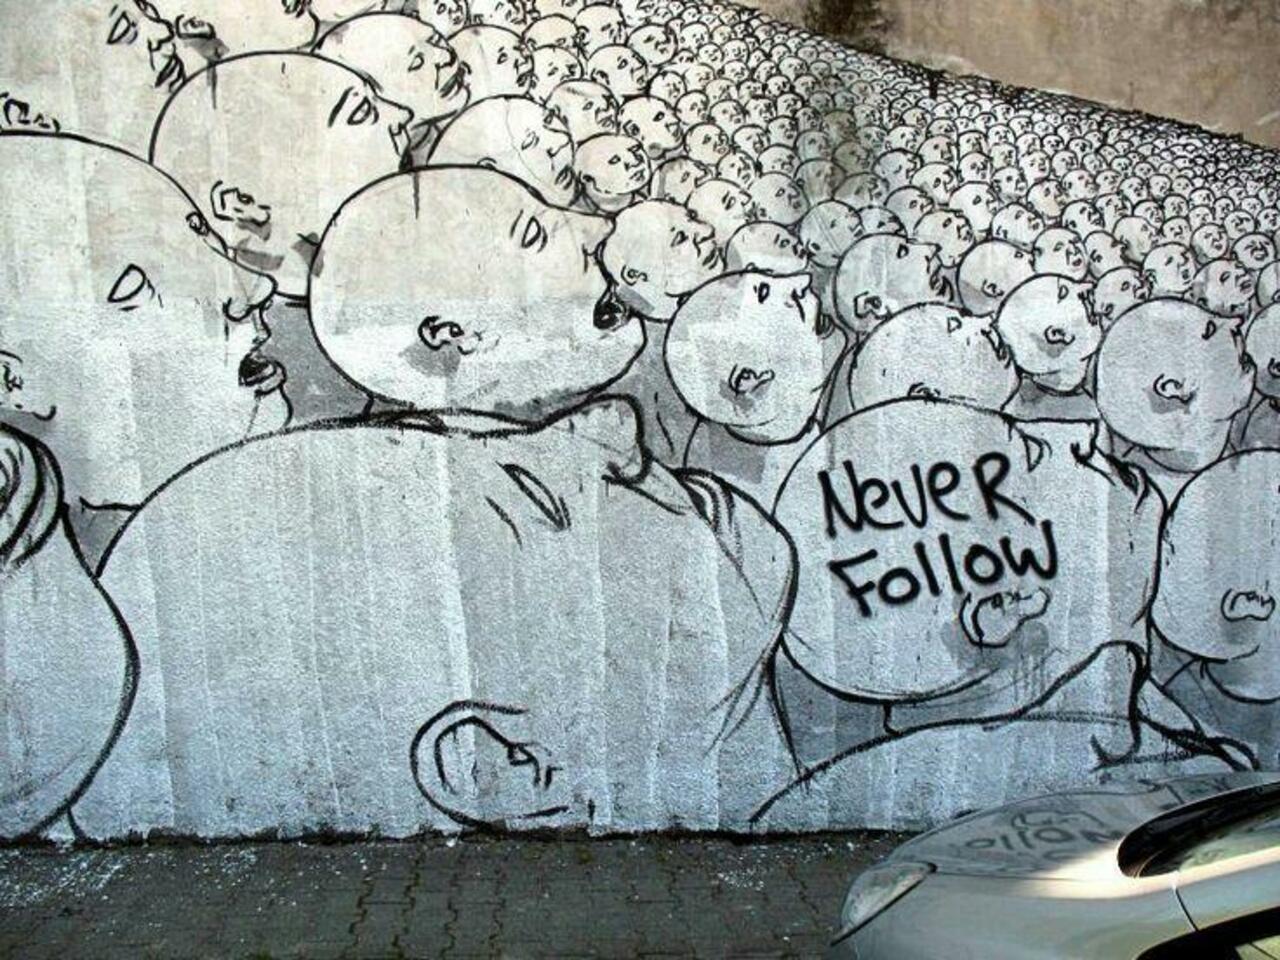 RT @hypatia373: #art #streetart #graffiti http://t.co/lACiRotBCa